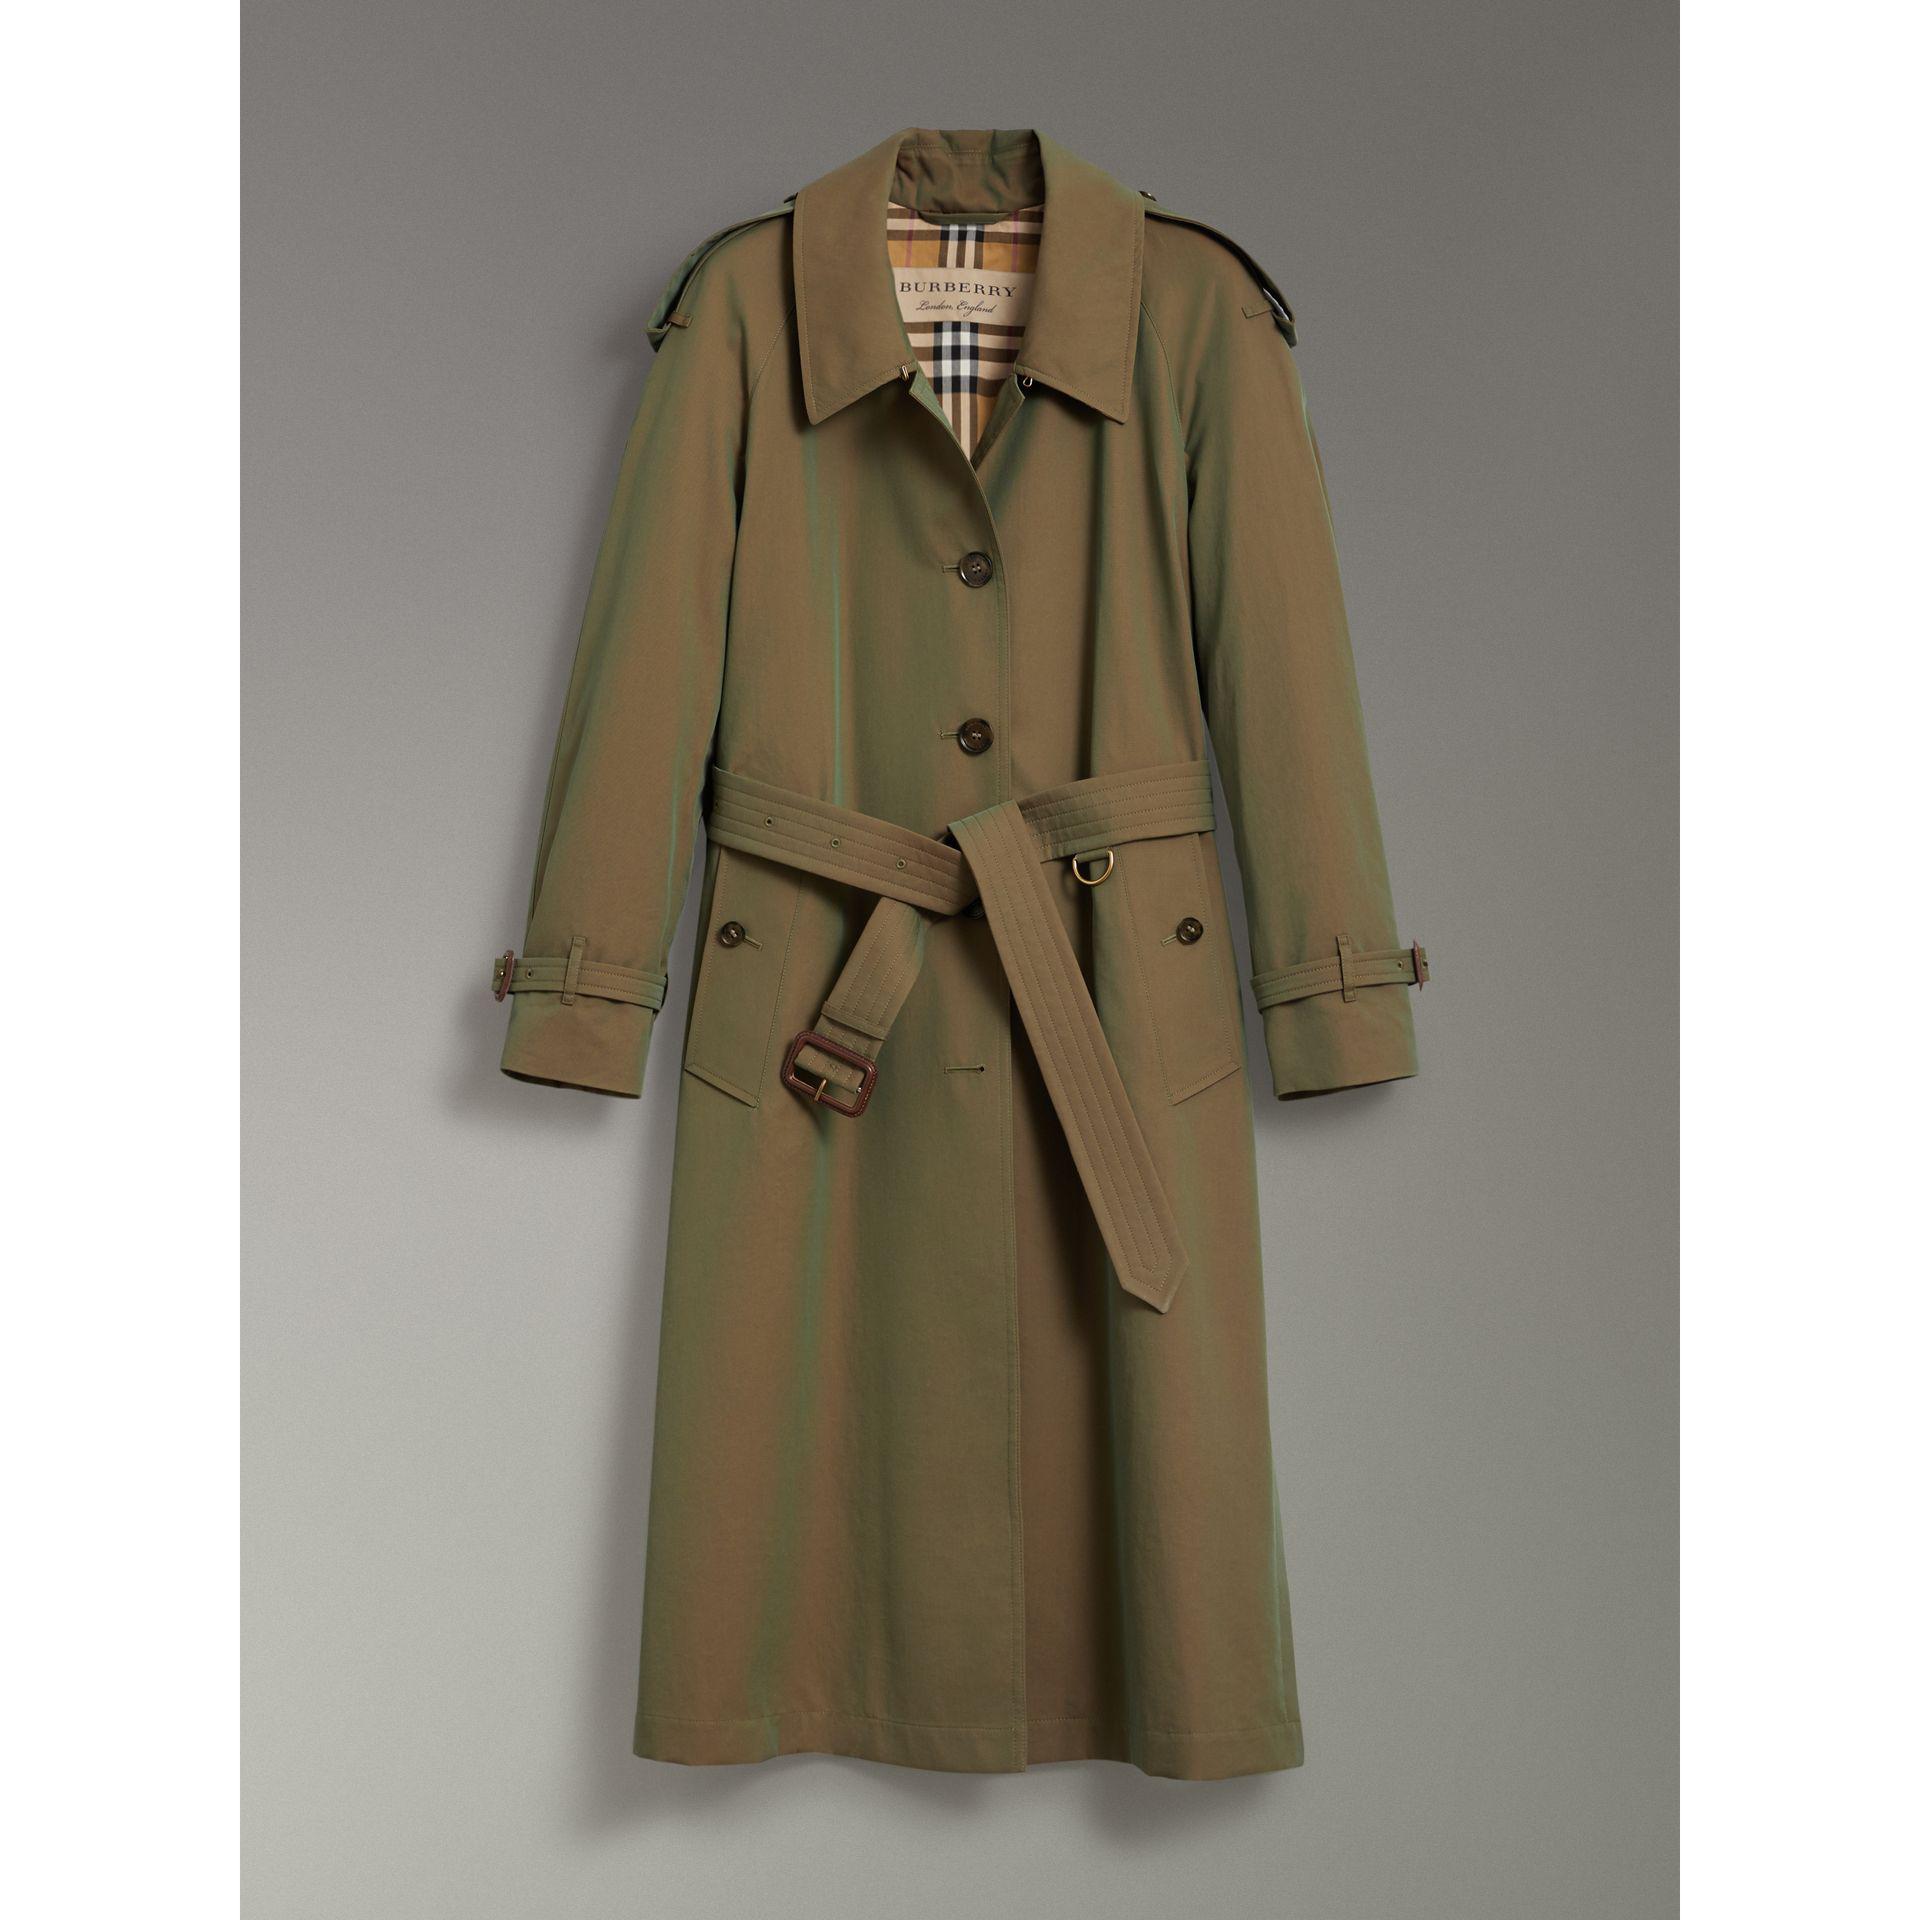 Everyday simplicity  Burberry trench coat, Burberry coat